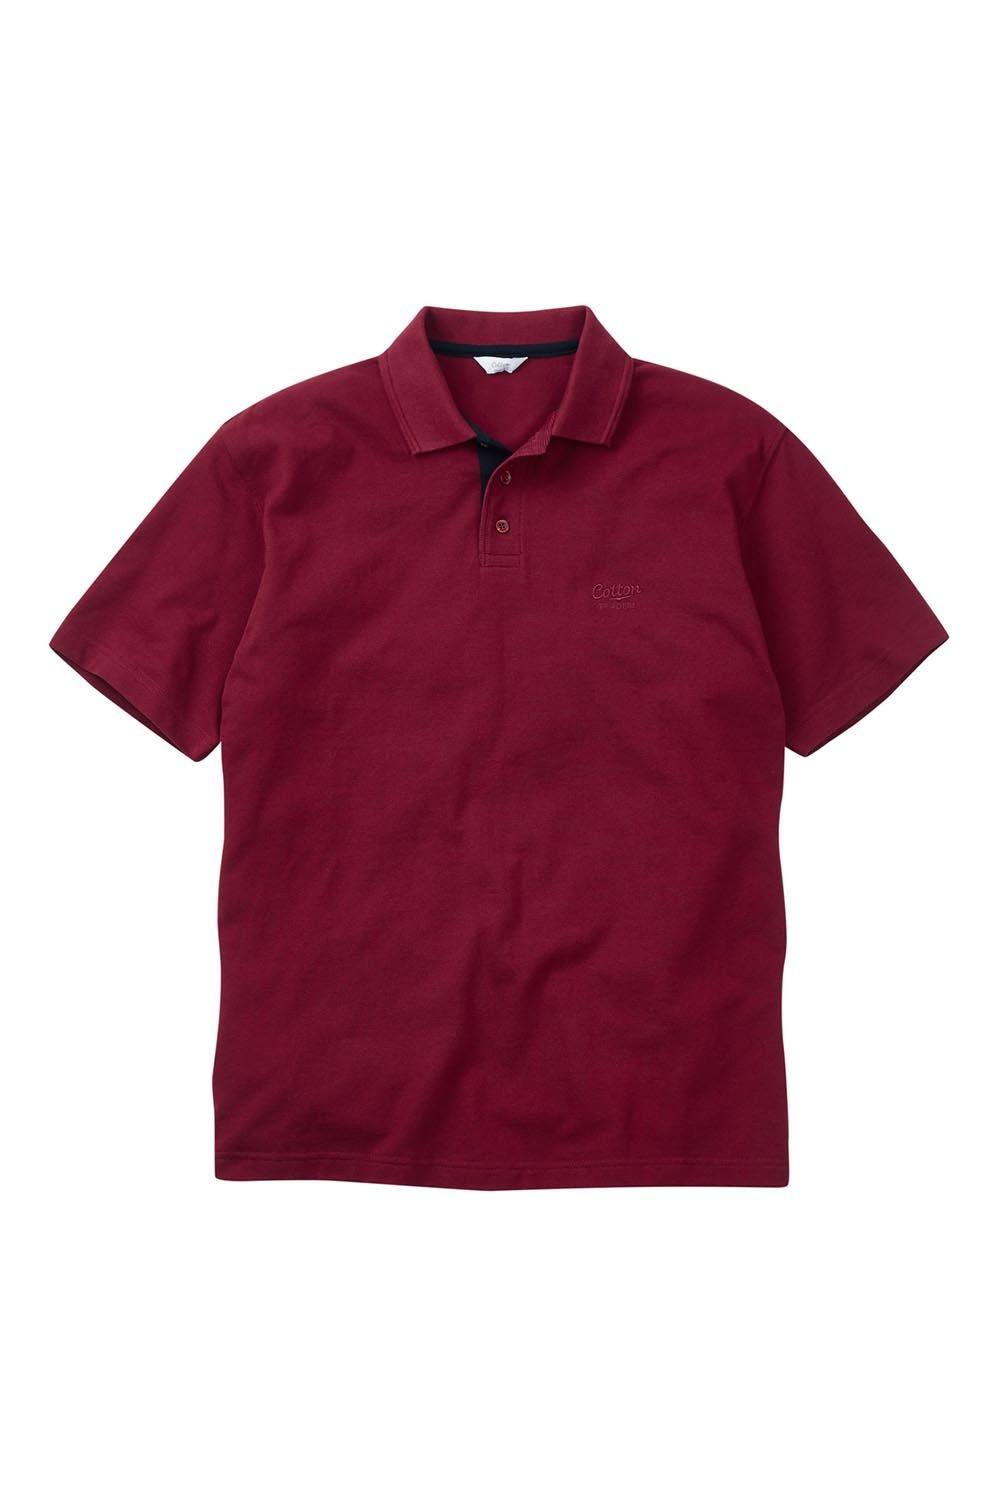 Рубашка поло с коротким рукавом Cotton Traders, красный цена и фото